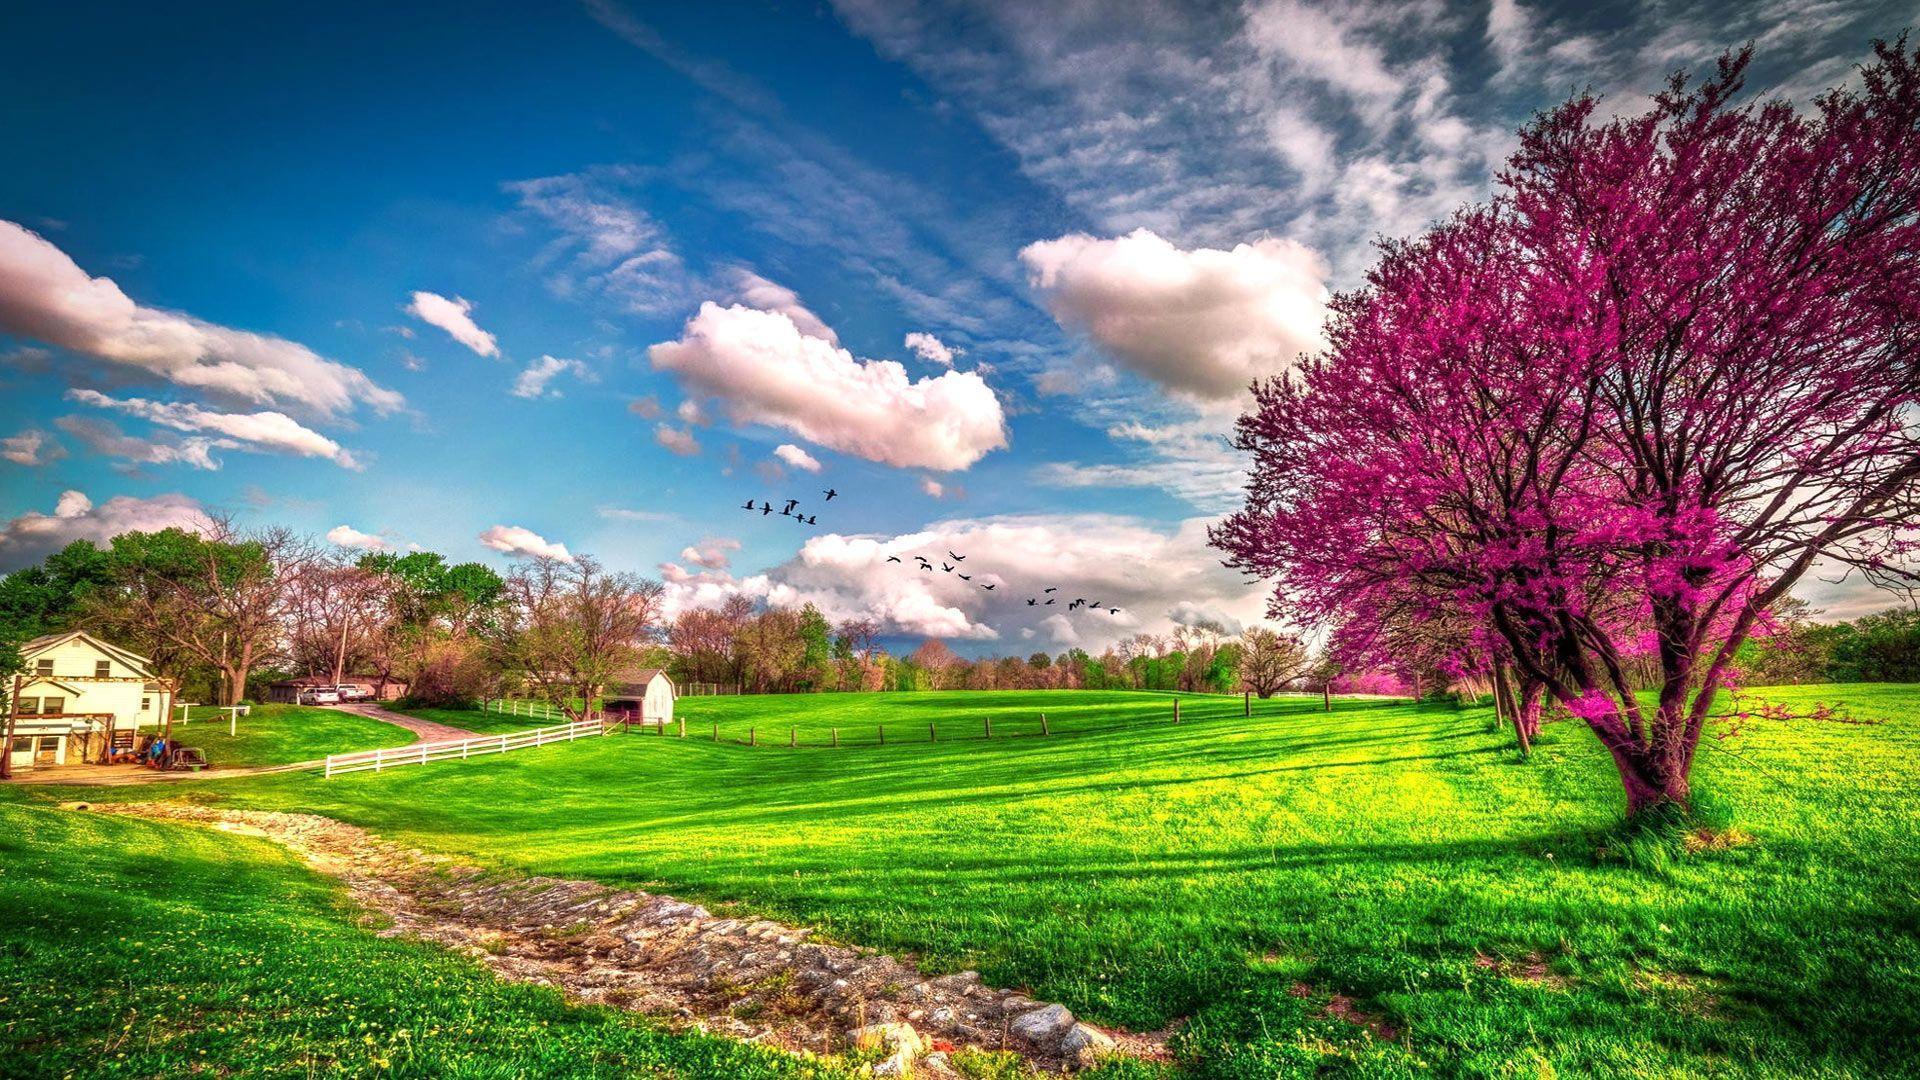 Beautiful Spring Scenery Wallpaper Hd 1080p 1920x1080 Desktop